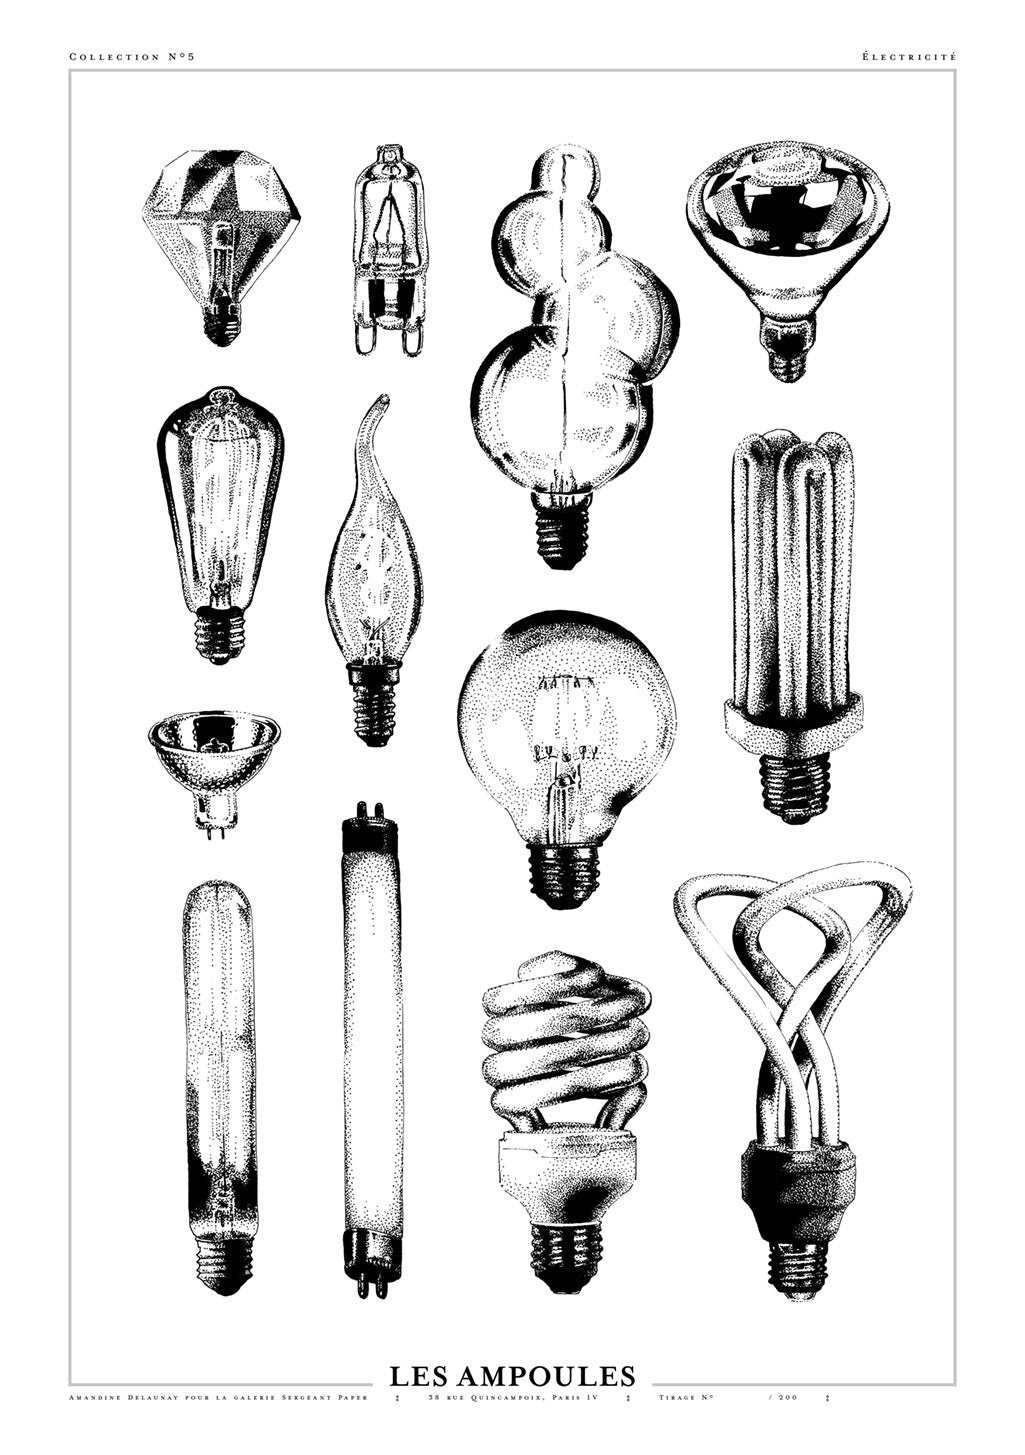 The lightbulbs